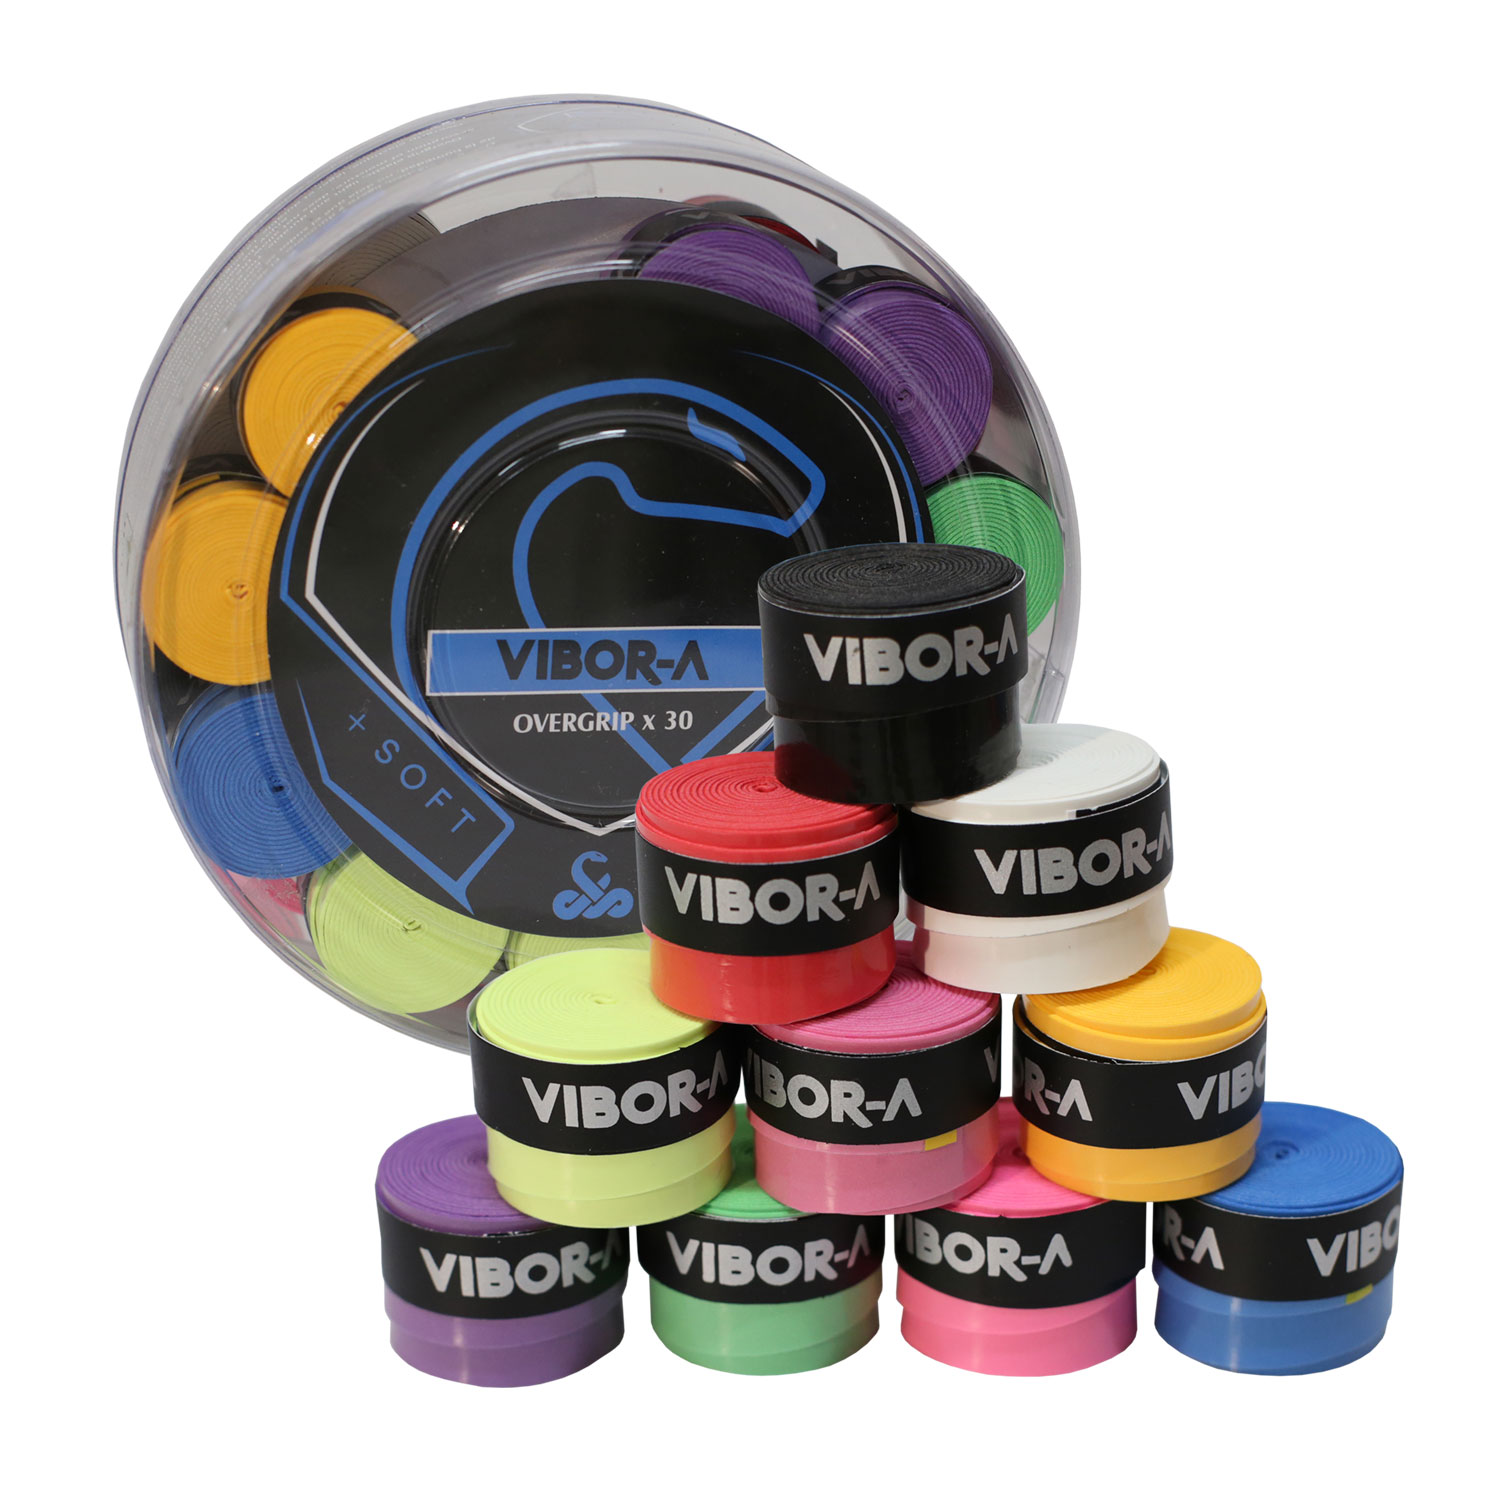 Vibor-A + Soft x 30 Overgrip - Multicolor